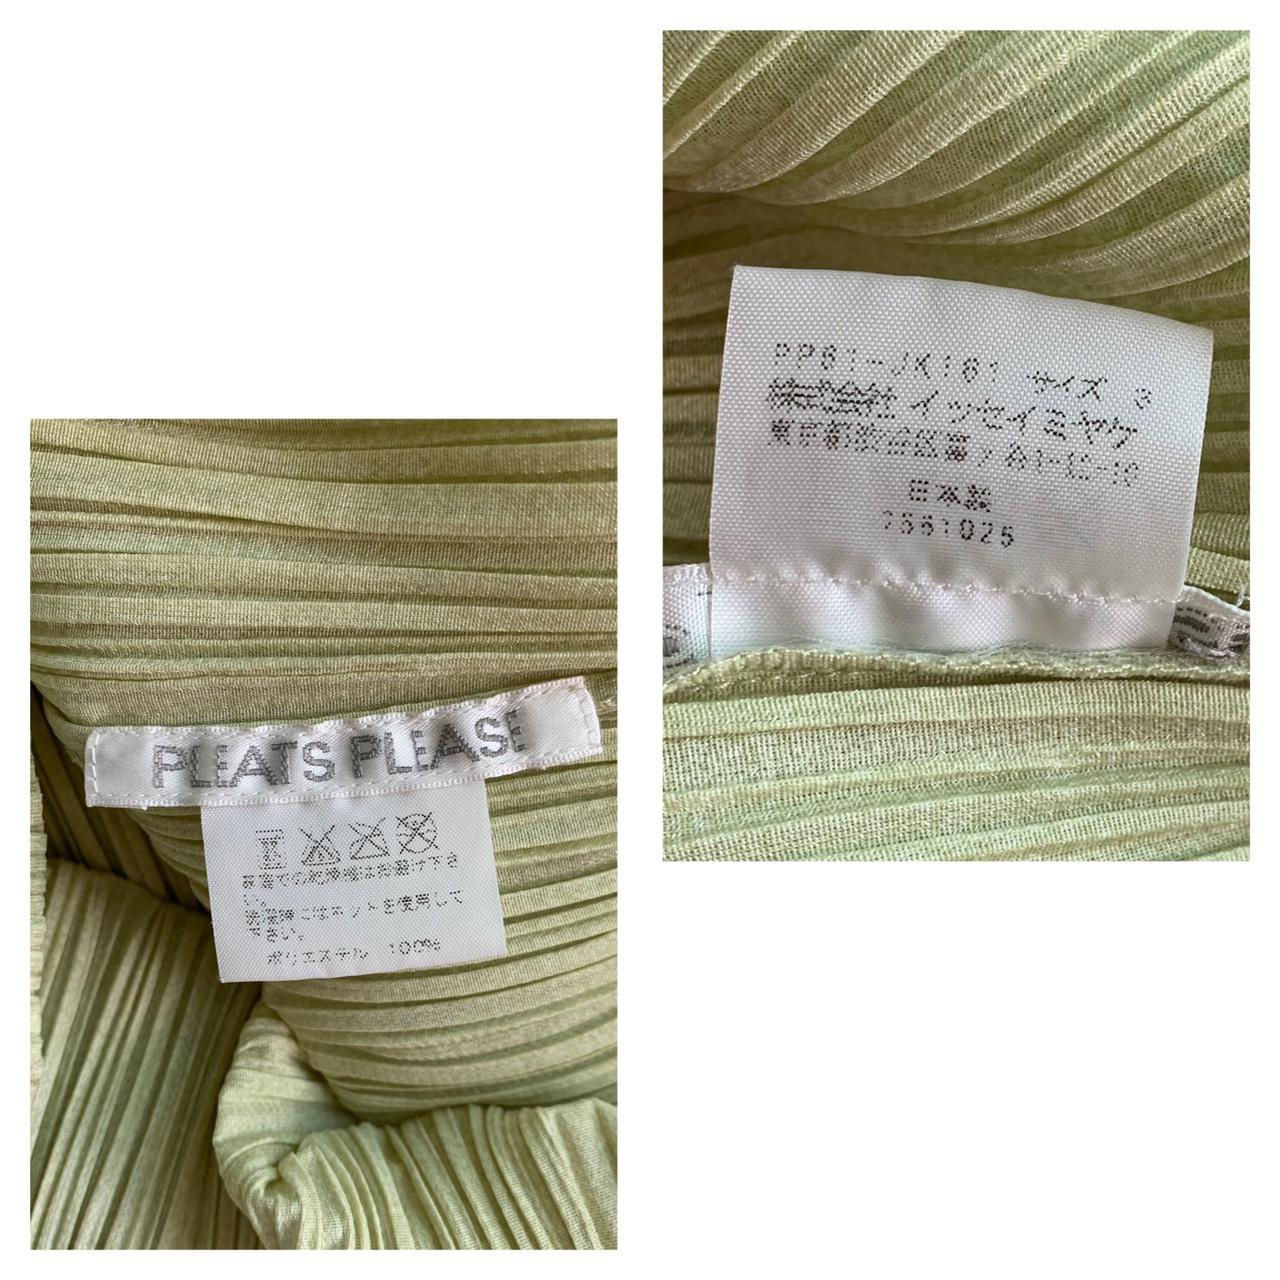 Product Image 2 - ꘎♡⊹₊┈ㆍ┈ㆍ┈ㆍ୨୧ㆍ┈ㆍ┈ㆍ┈₊⊹♡꘎

🧚🏻 light green pleats please